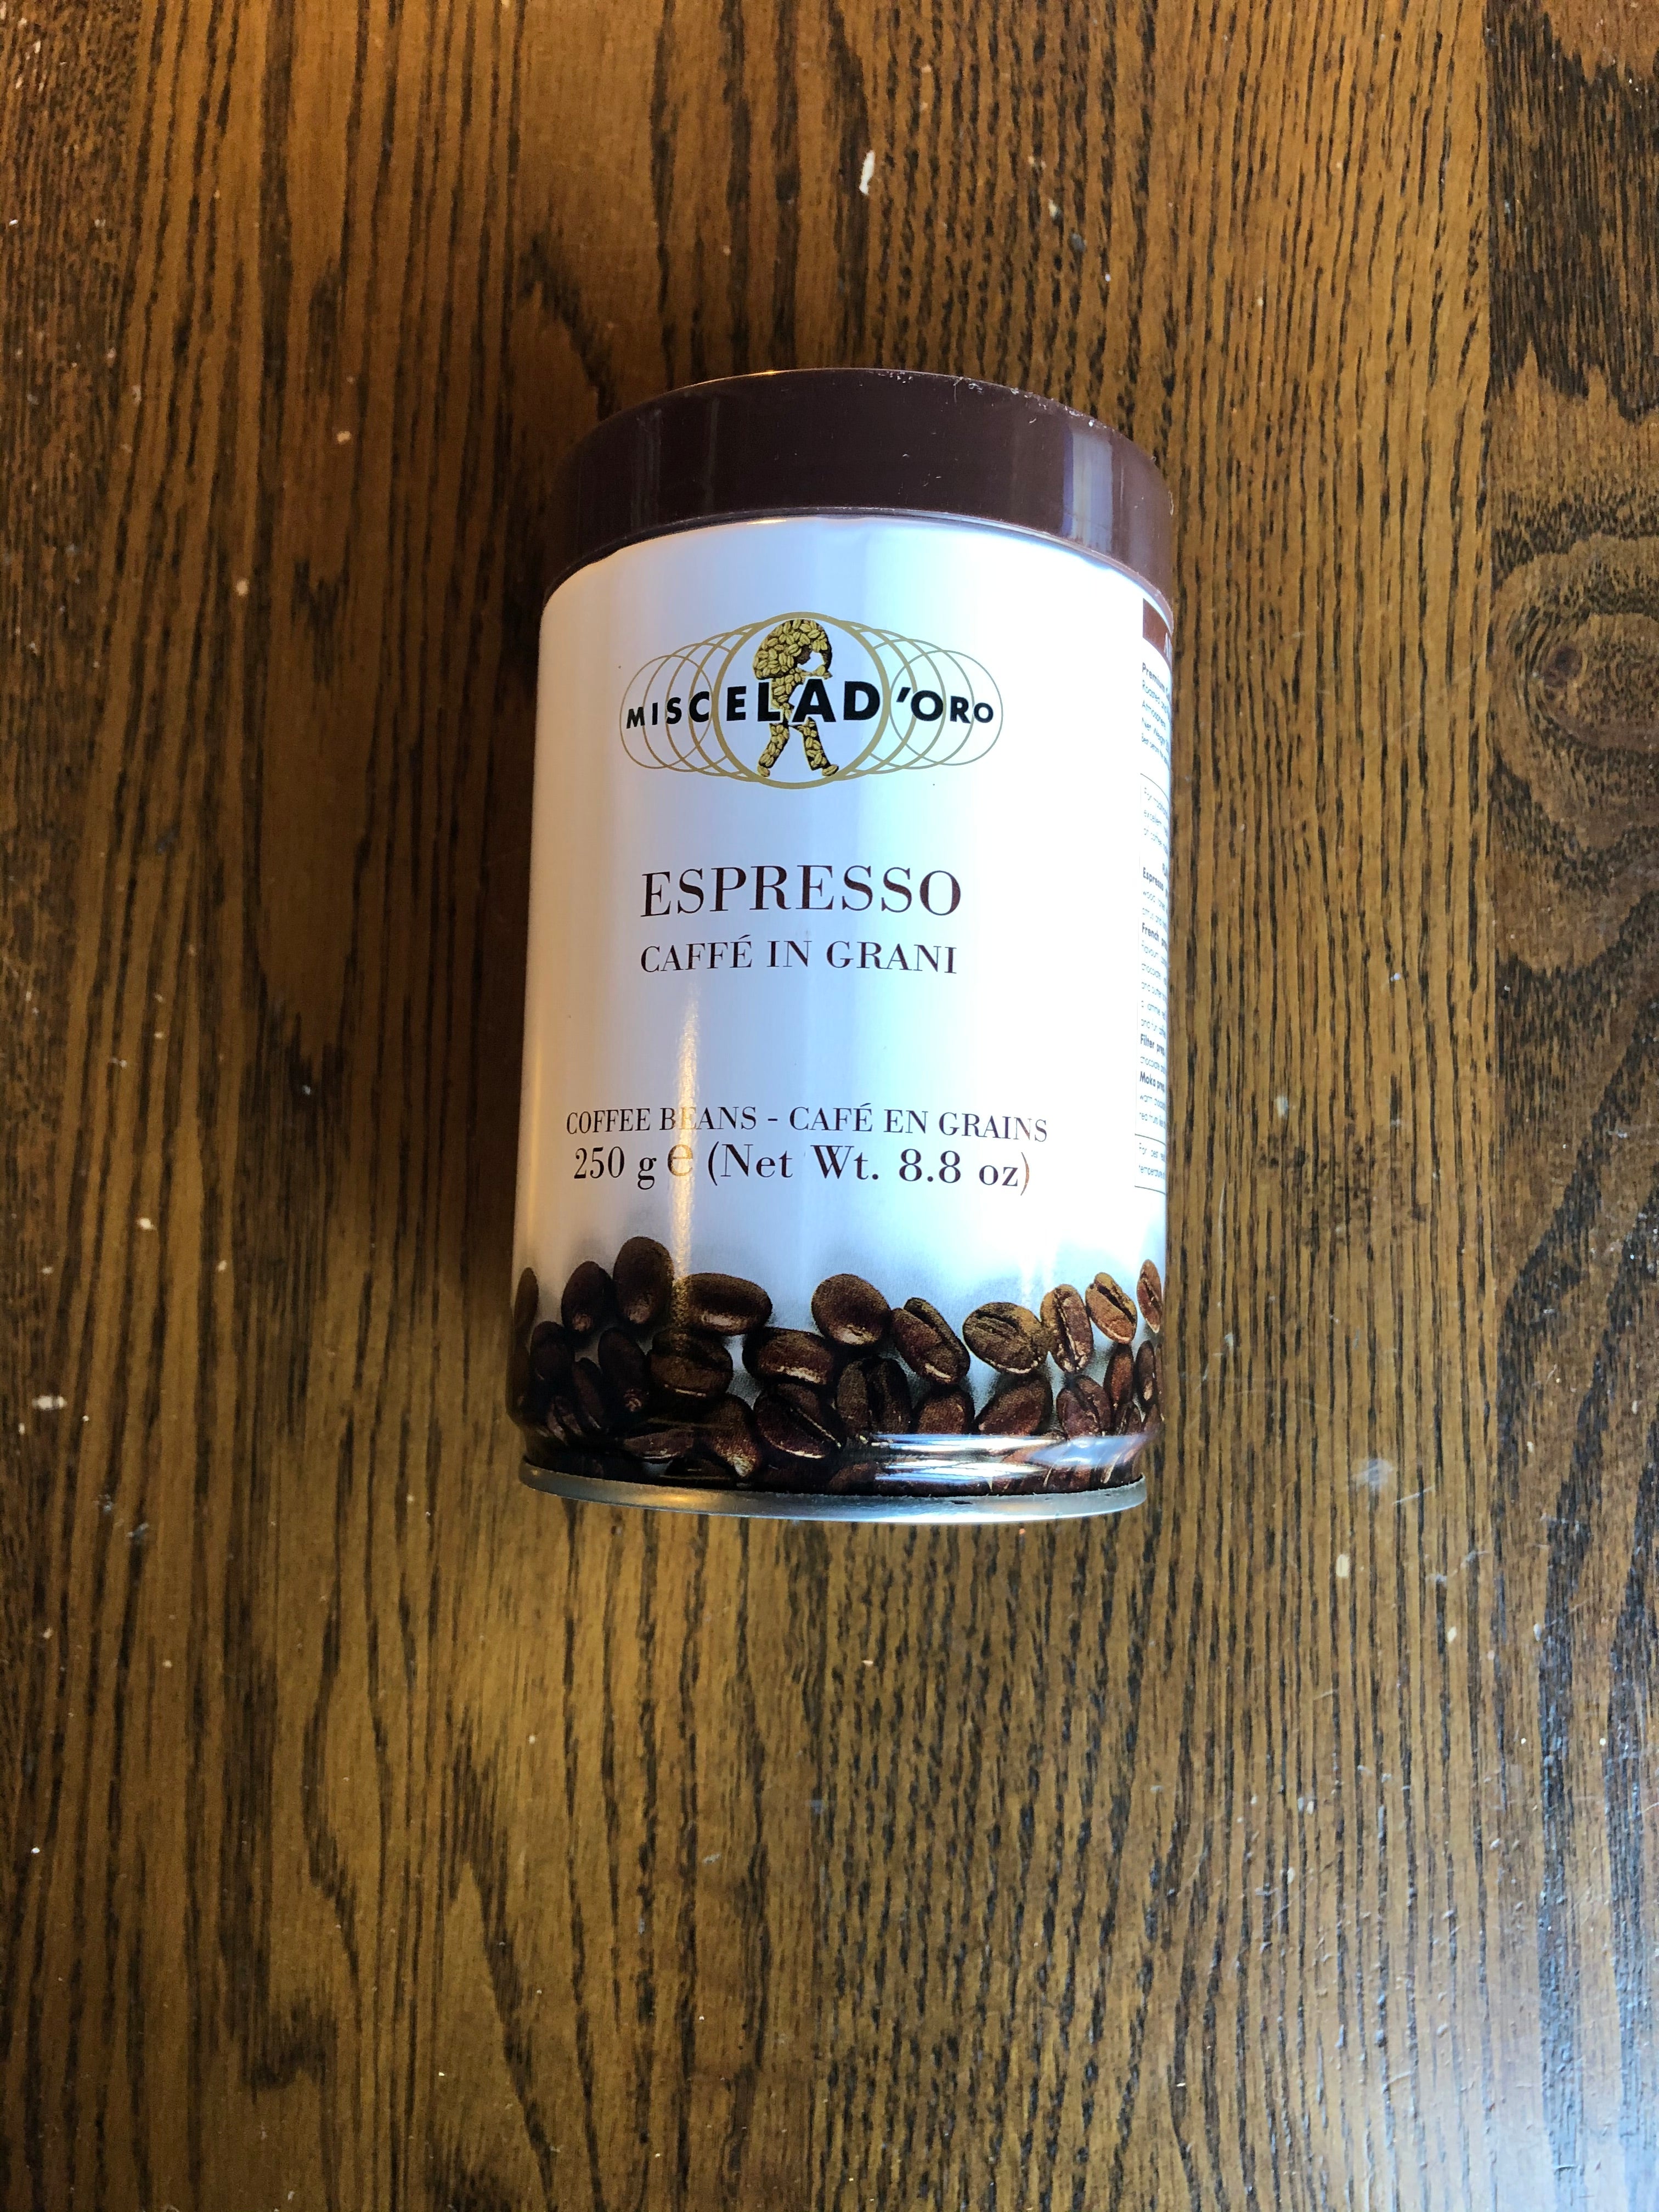 Coffee Miscelad'Oro Espresso